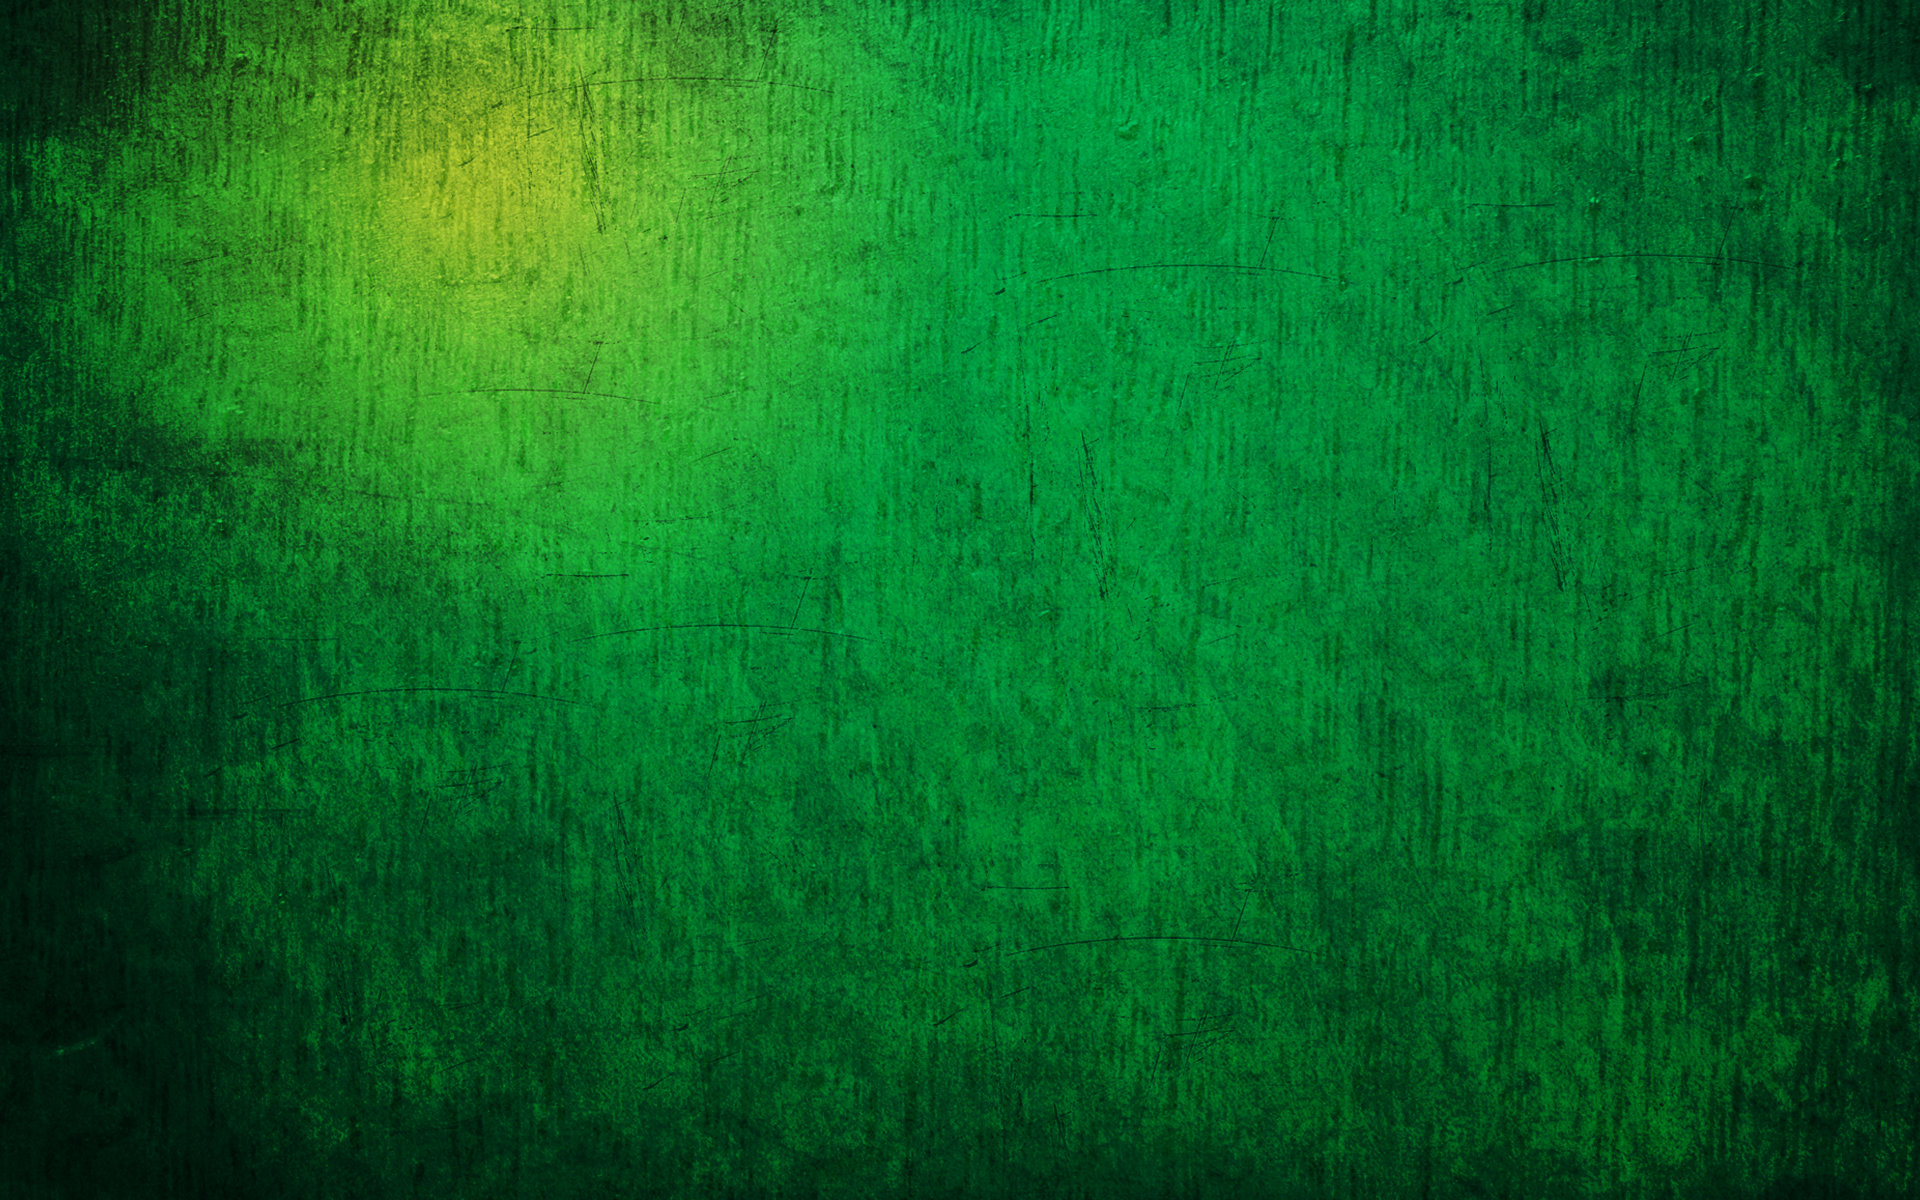  50 Dark  Green  Background Wallpaper  on WallpaperSafari